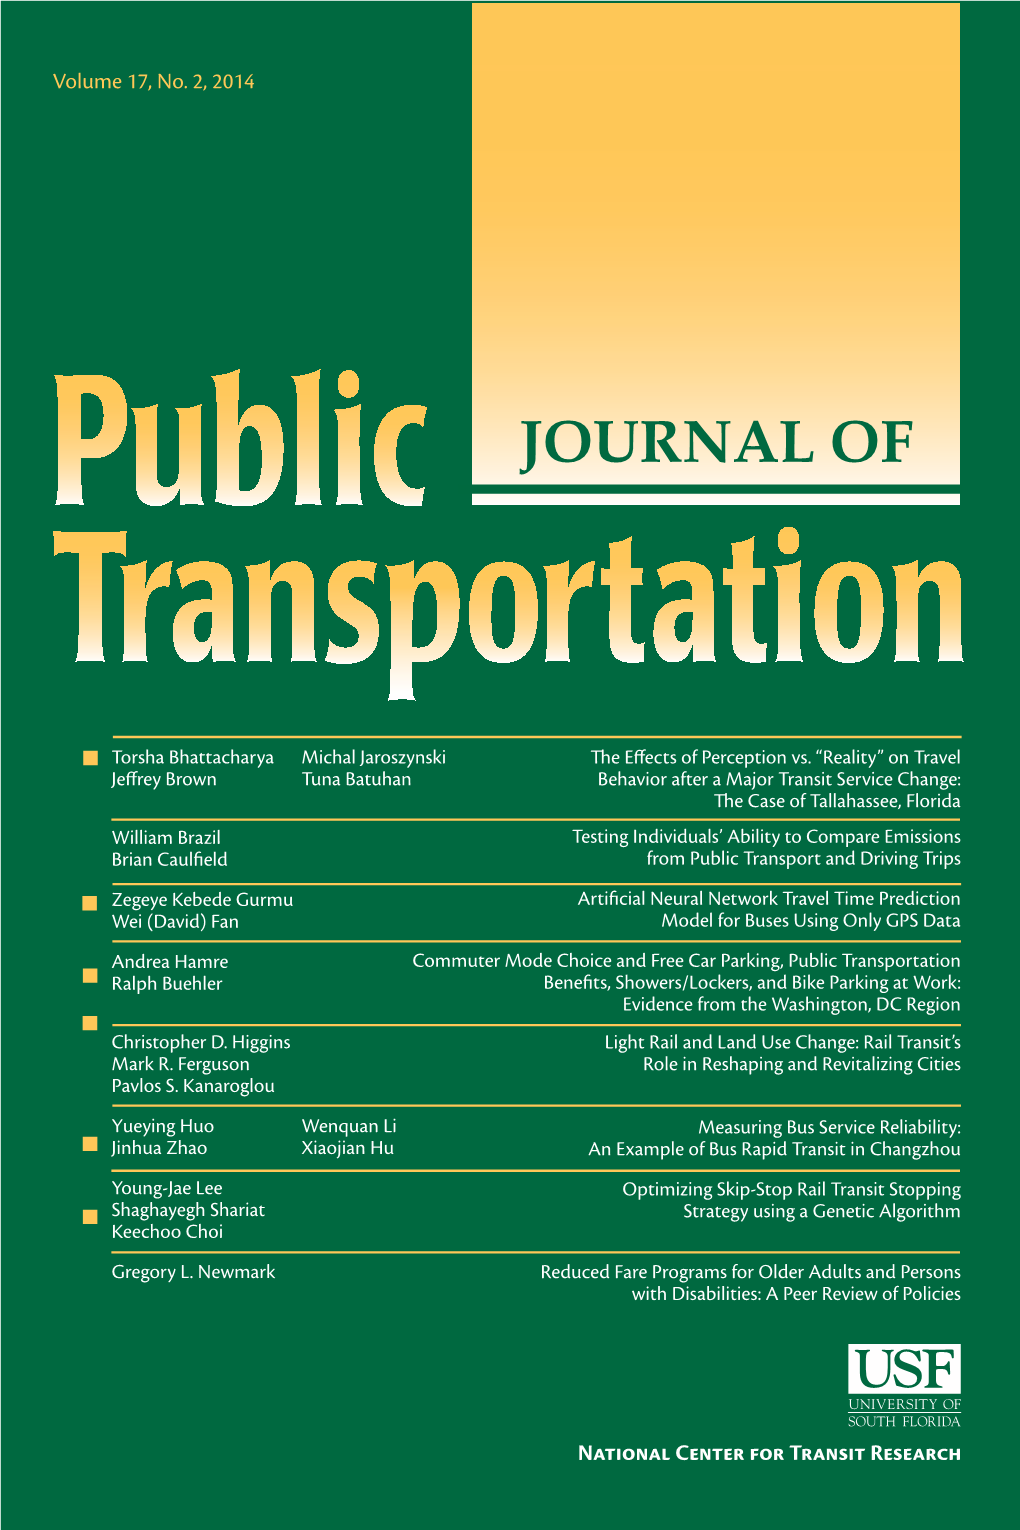 Journal of Public Transportation, 17.2